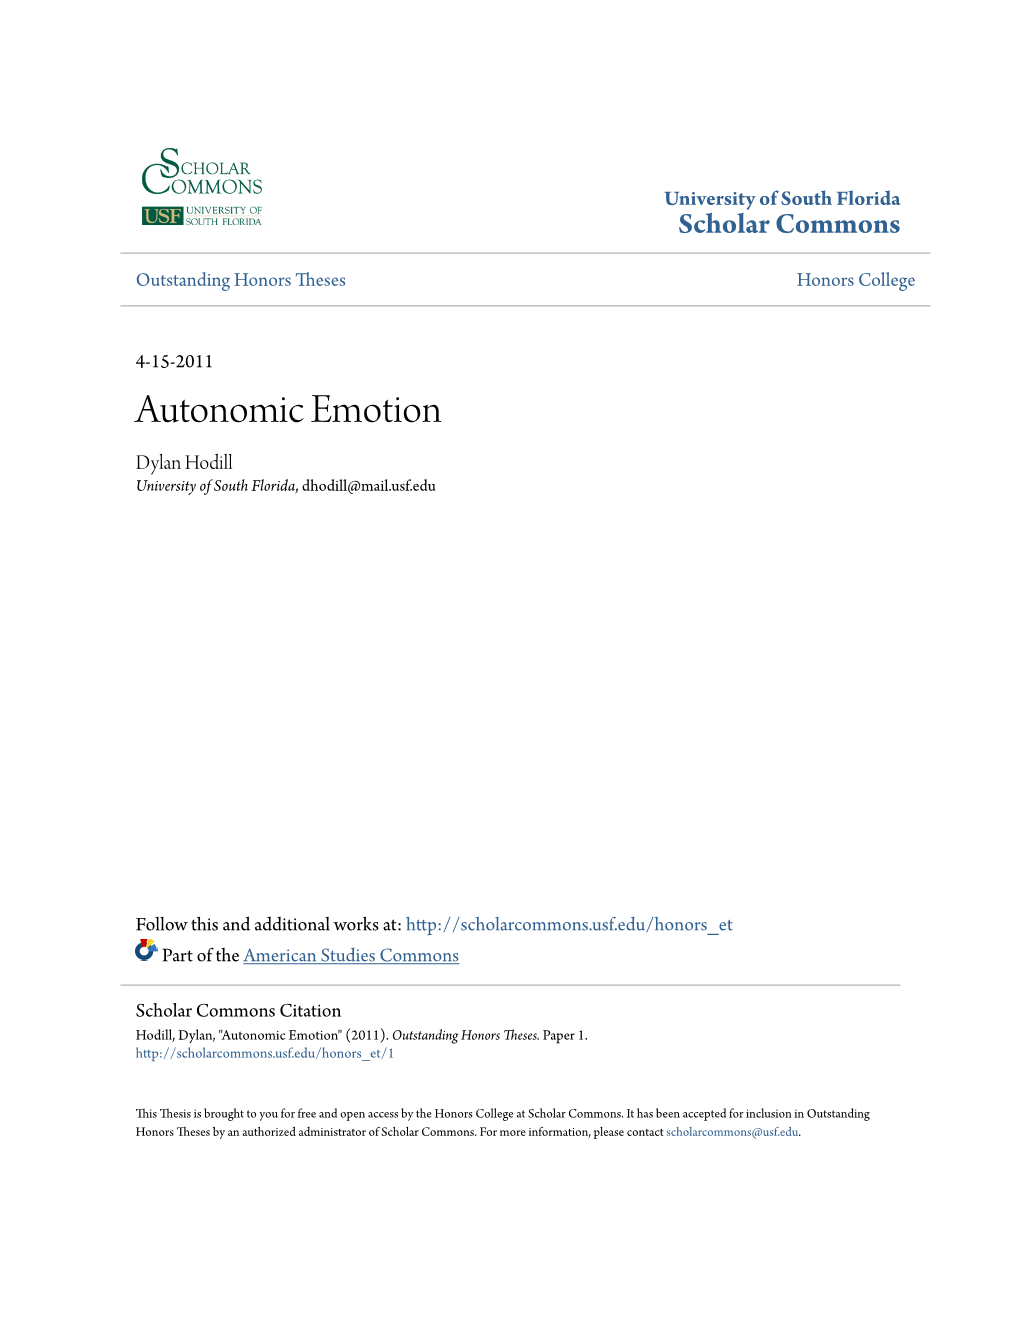 Autonomic Emotion Dylan Hodill University of South Florida, Dhodill@Mail.Usf.Edu